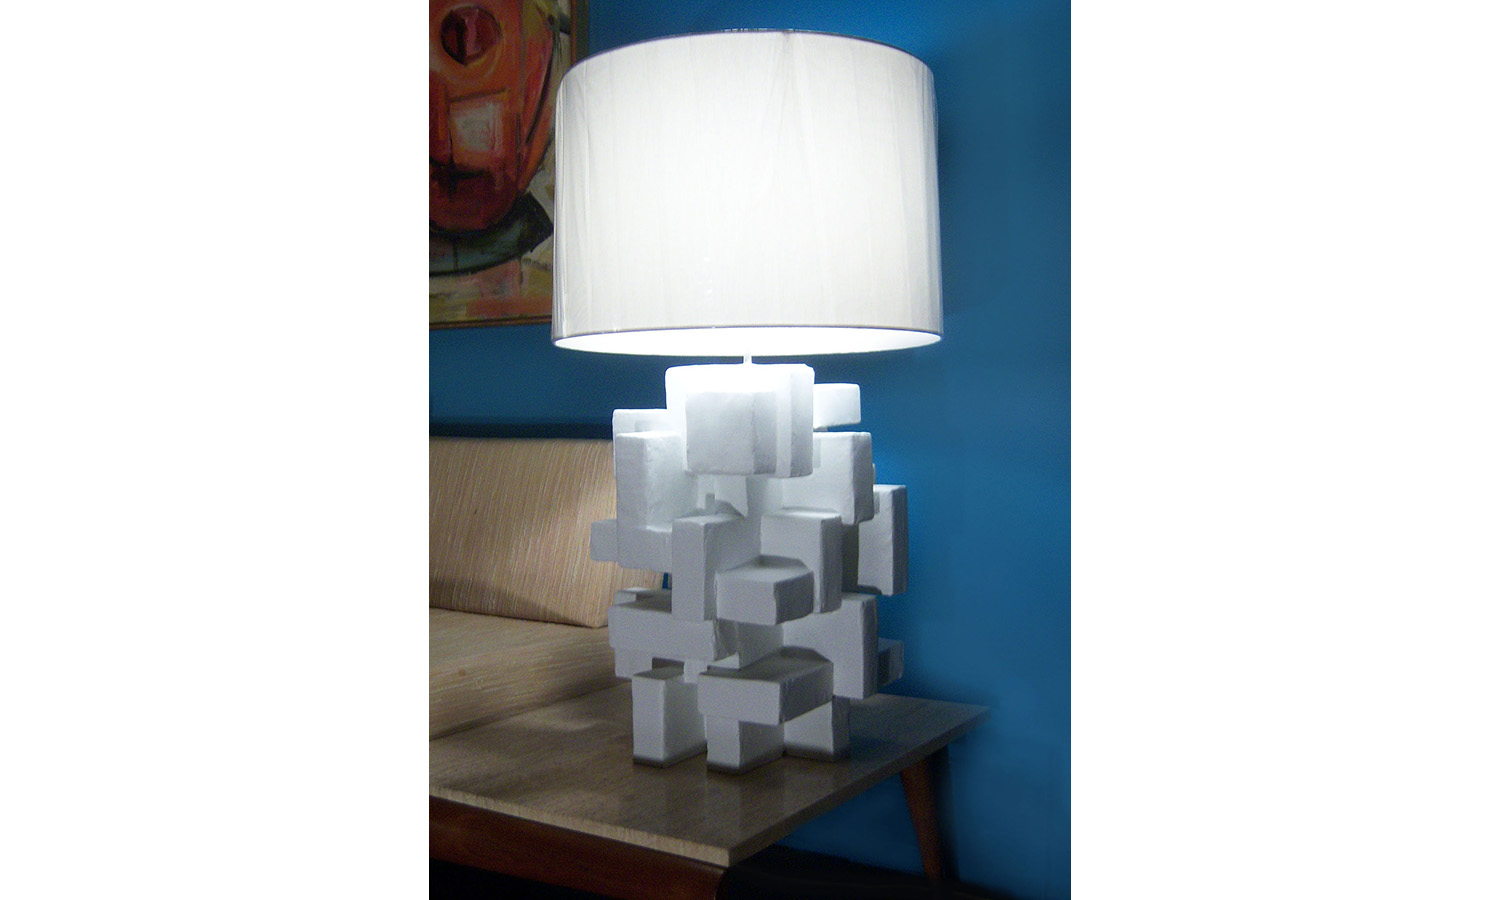 GOTHAM TABLE LAMP, 20" tall, 2014